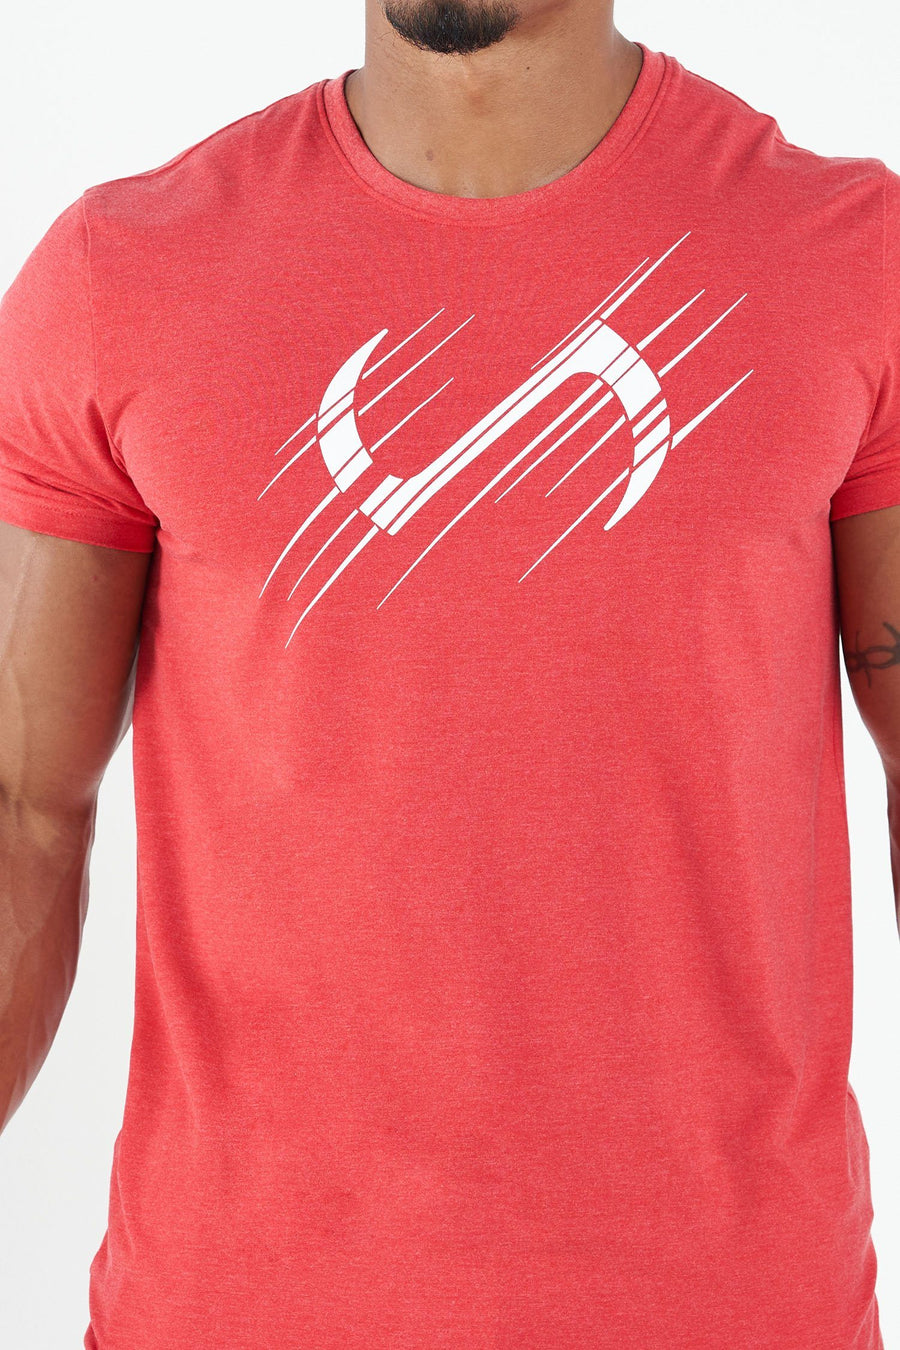 TLF Lift Gym T-Shirt - Gym T Shirts For Men - Red 5